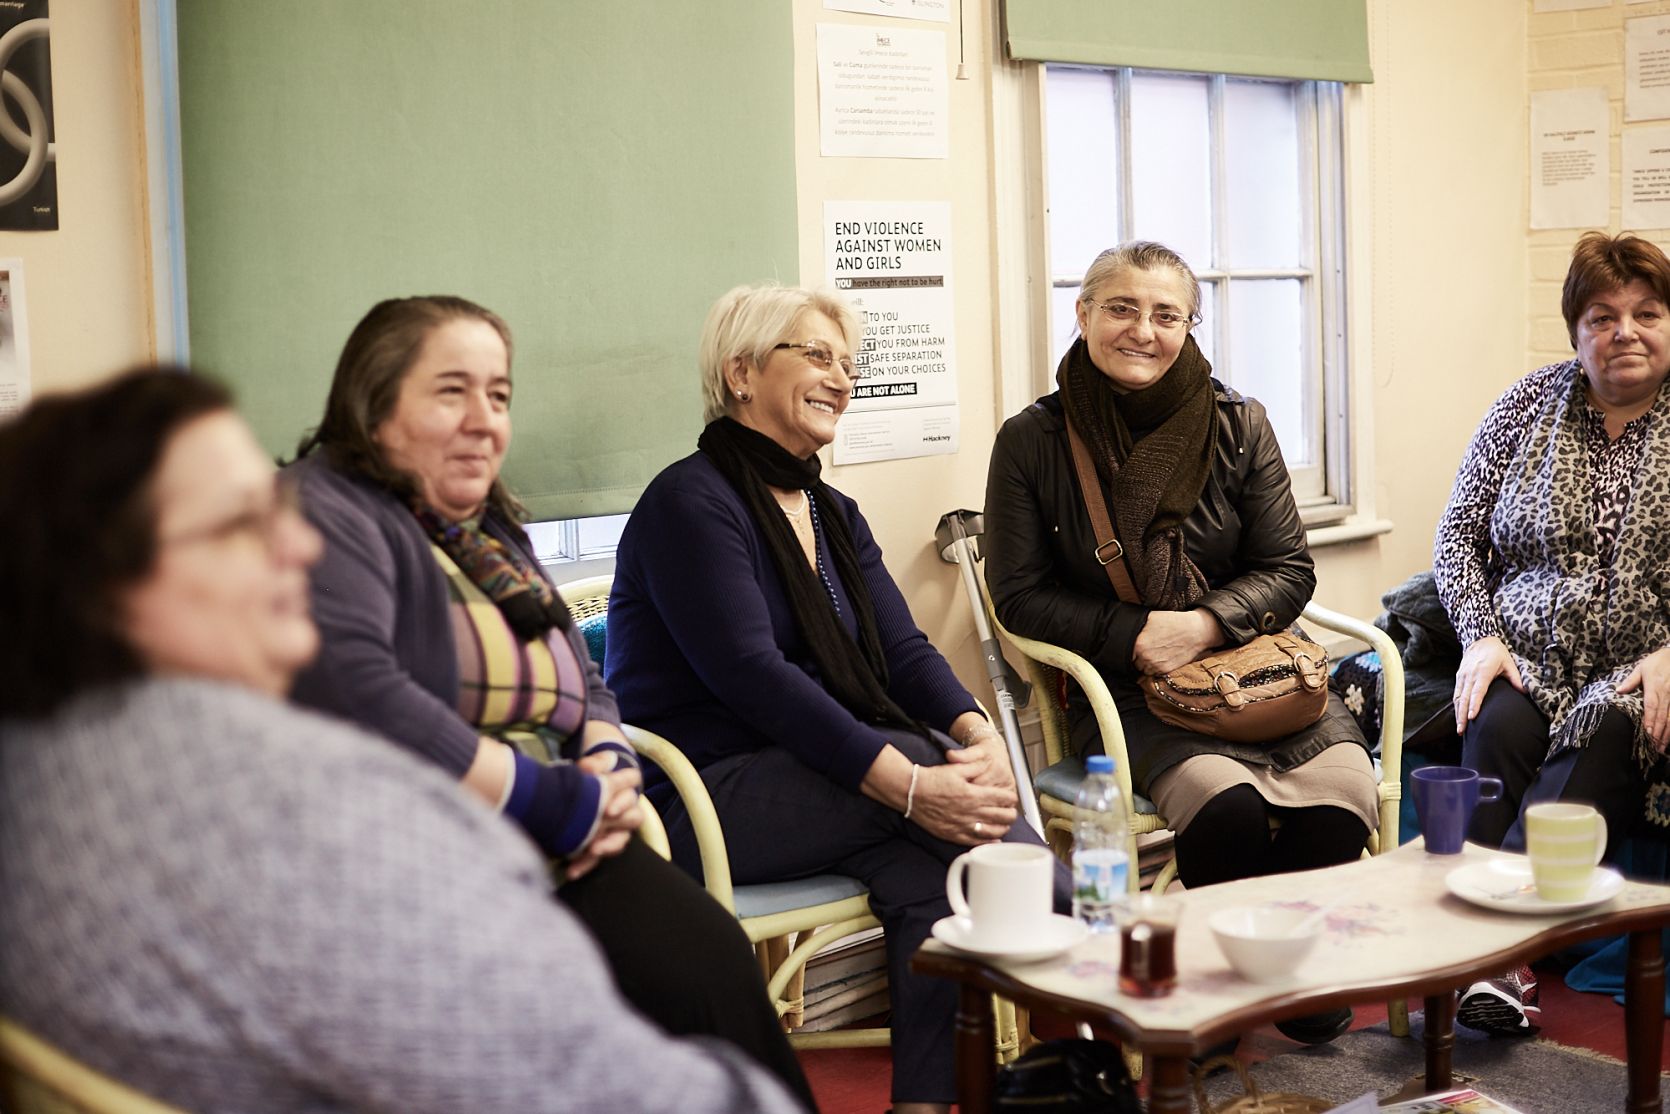 Session at IMECE Women's Centre, Canonbury (Photo credit: Tom Donald)